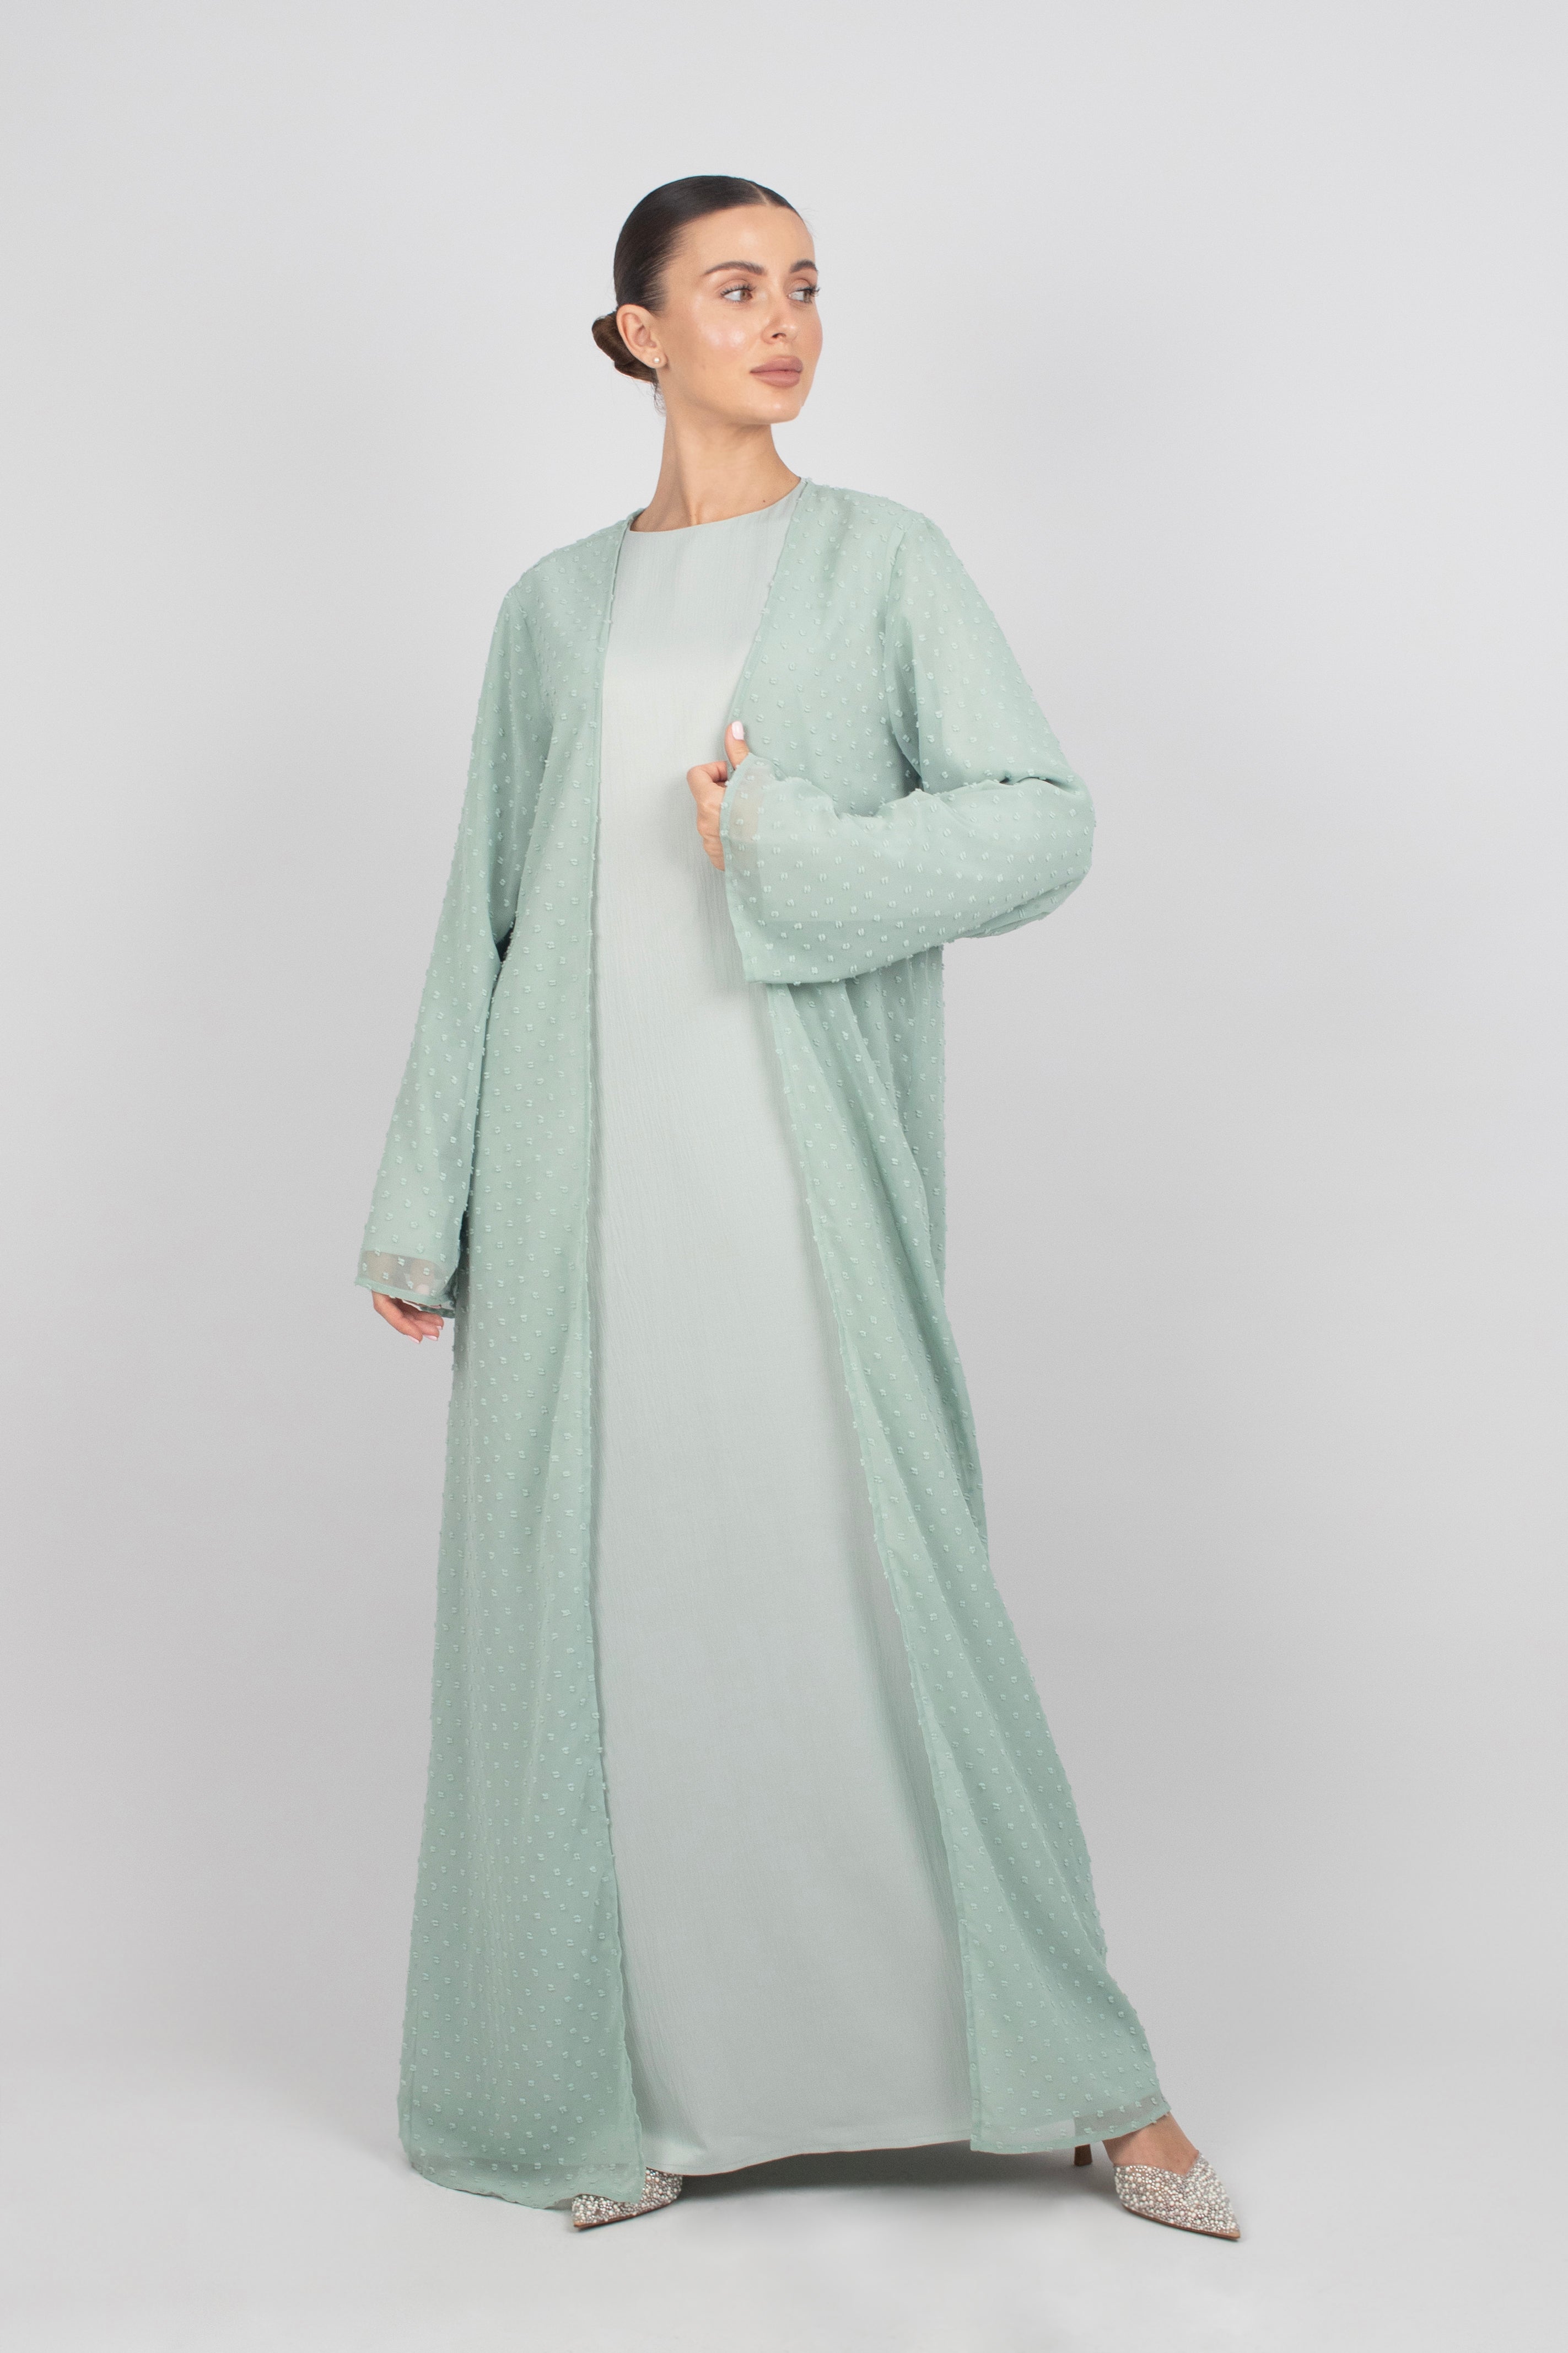 US - Sheer Abaya and Dress Set - Sea Mist